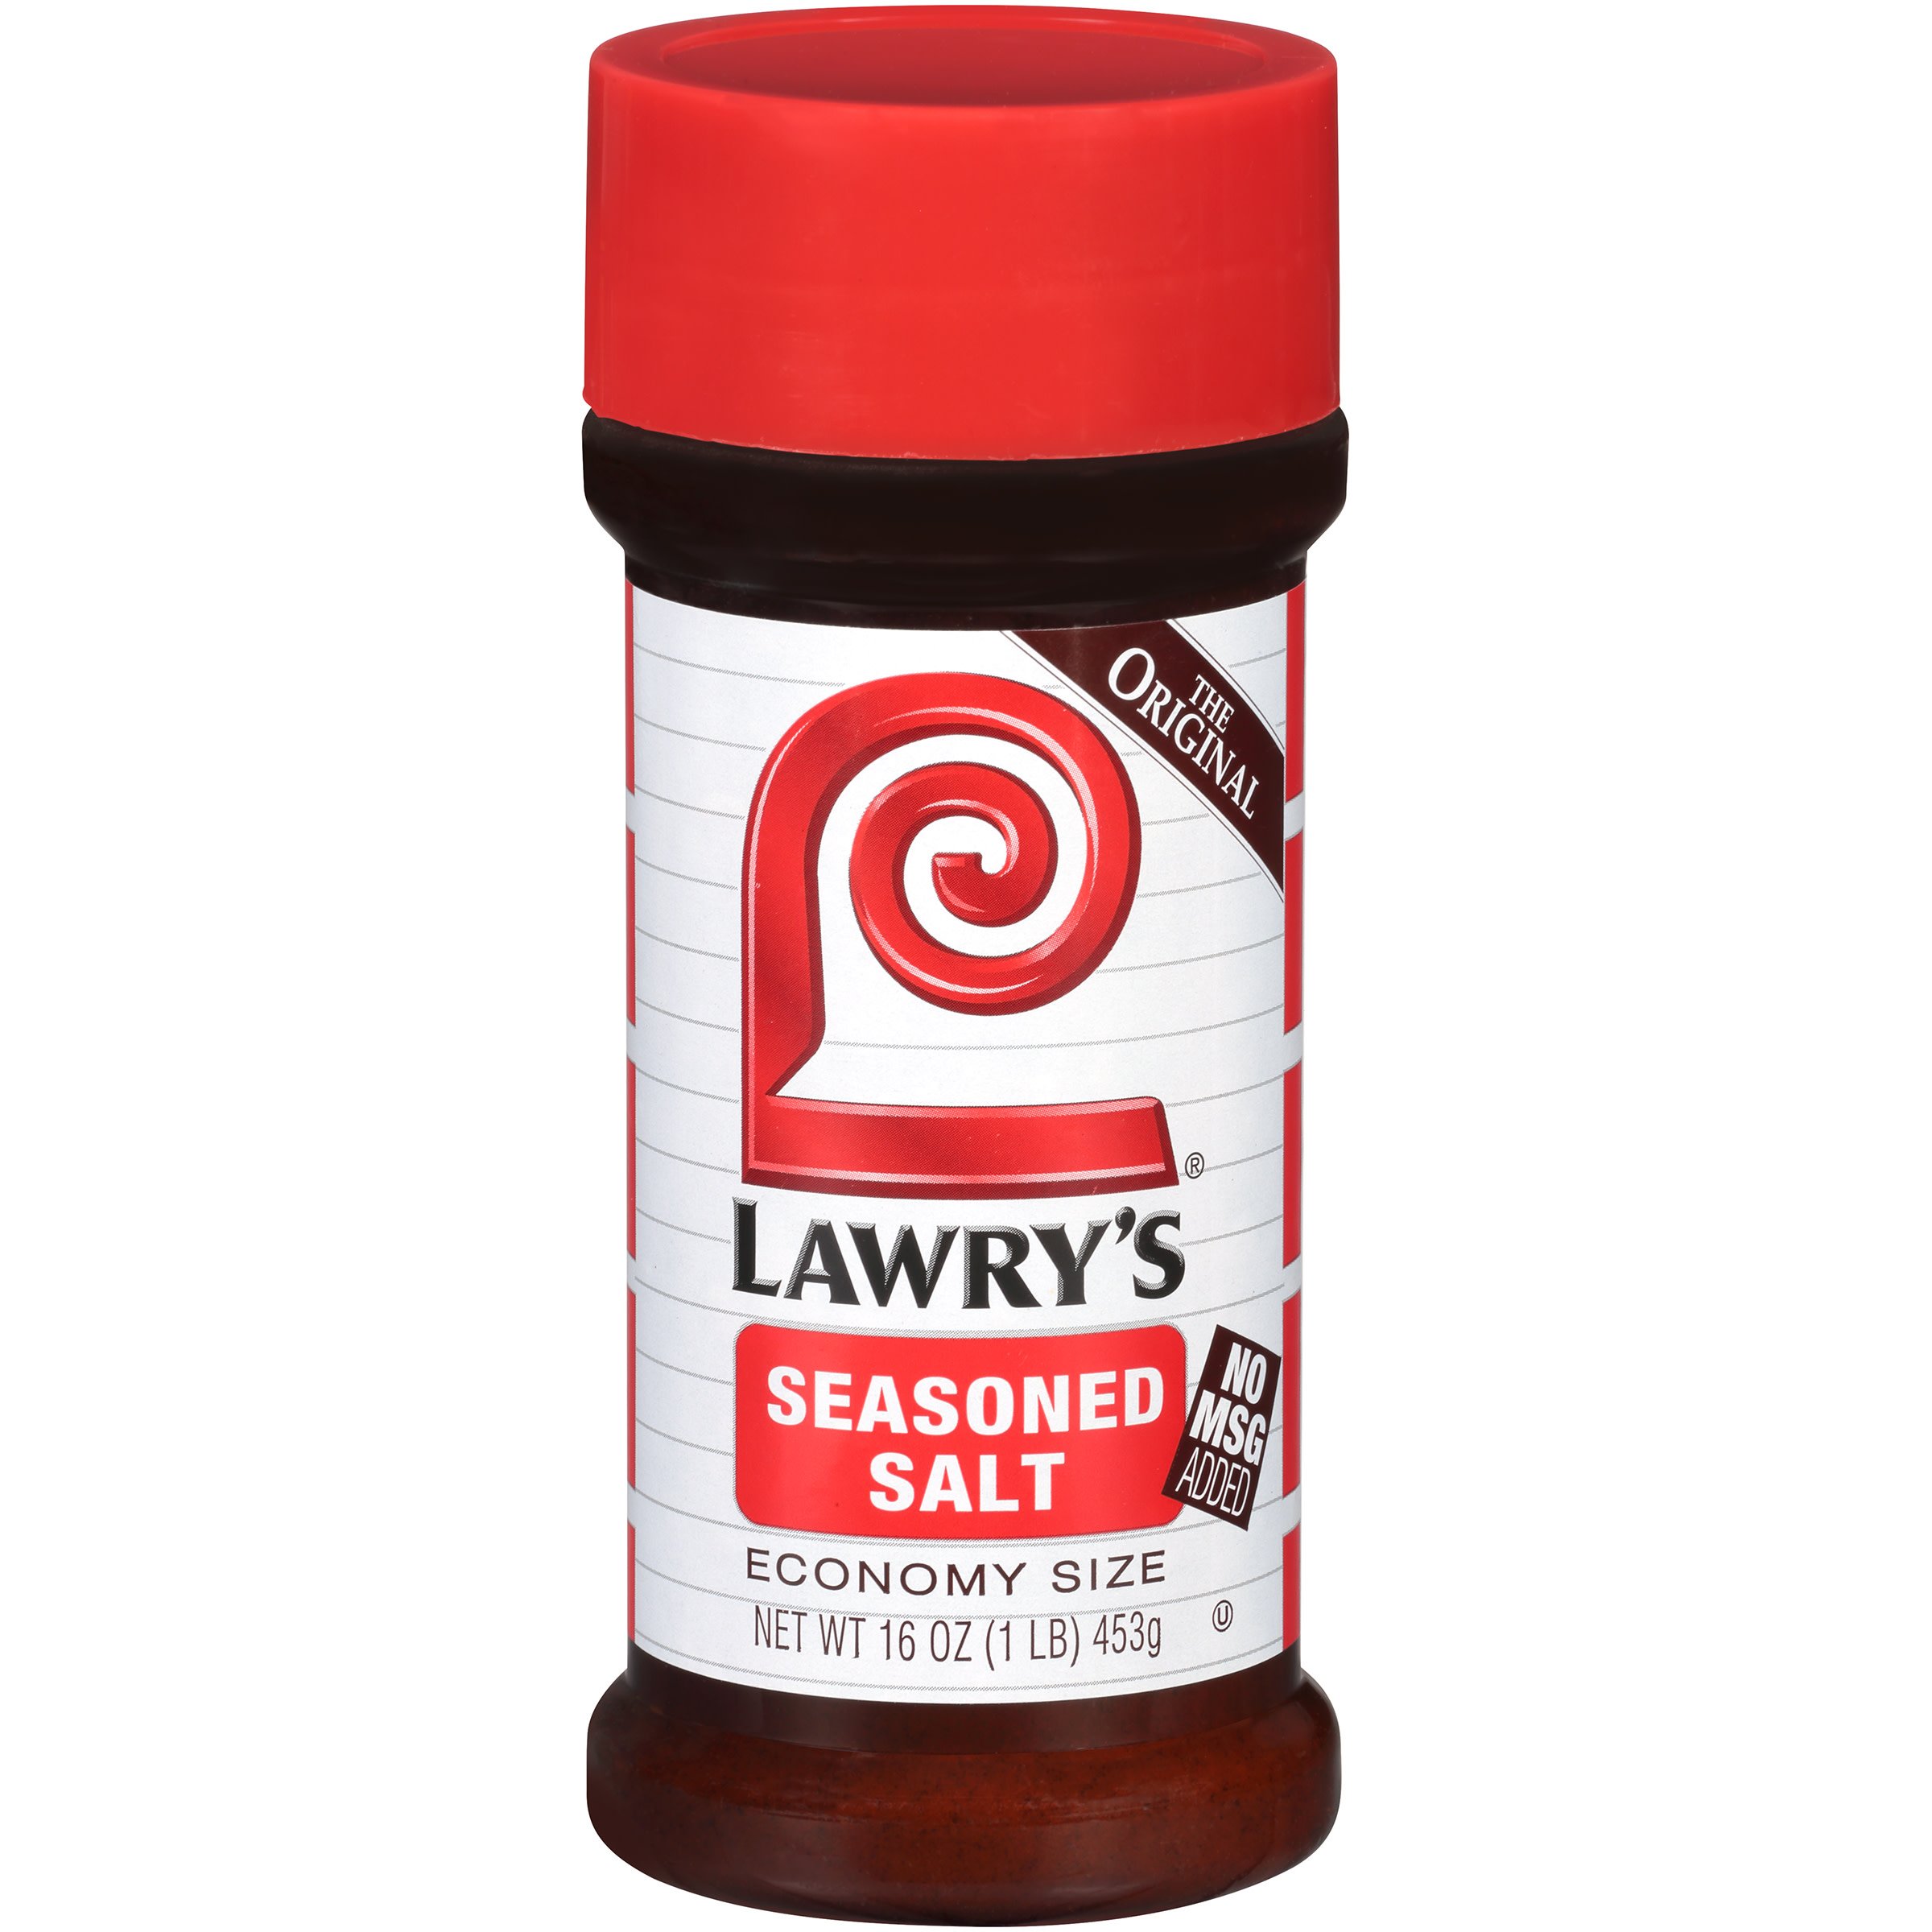 Lawry's Seasoned Salt Economy Size - Shop Herbs & Spices at H-E-B